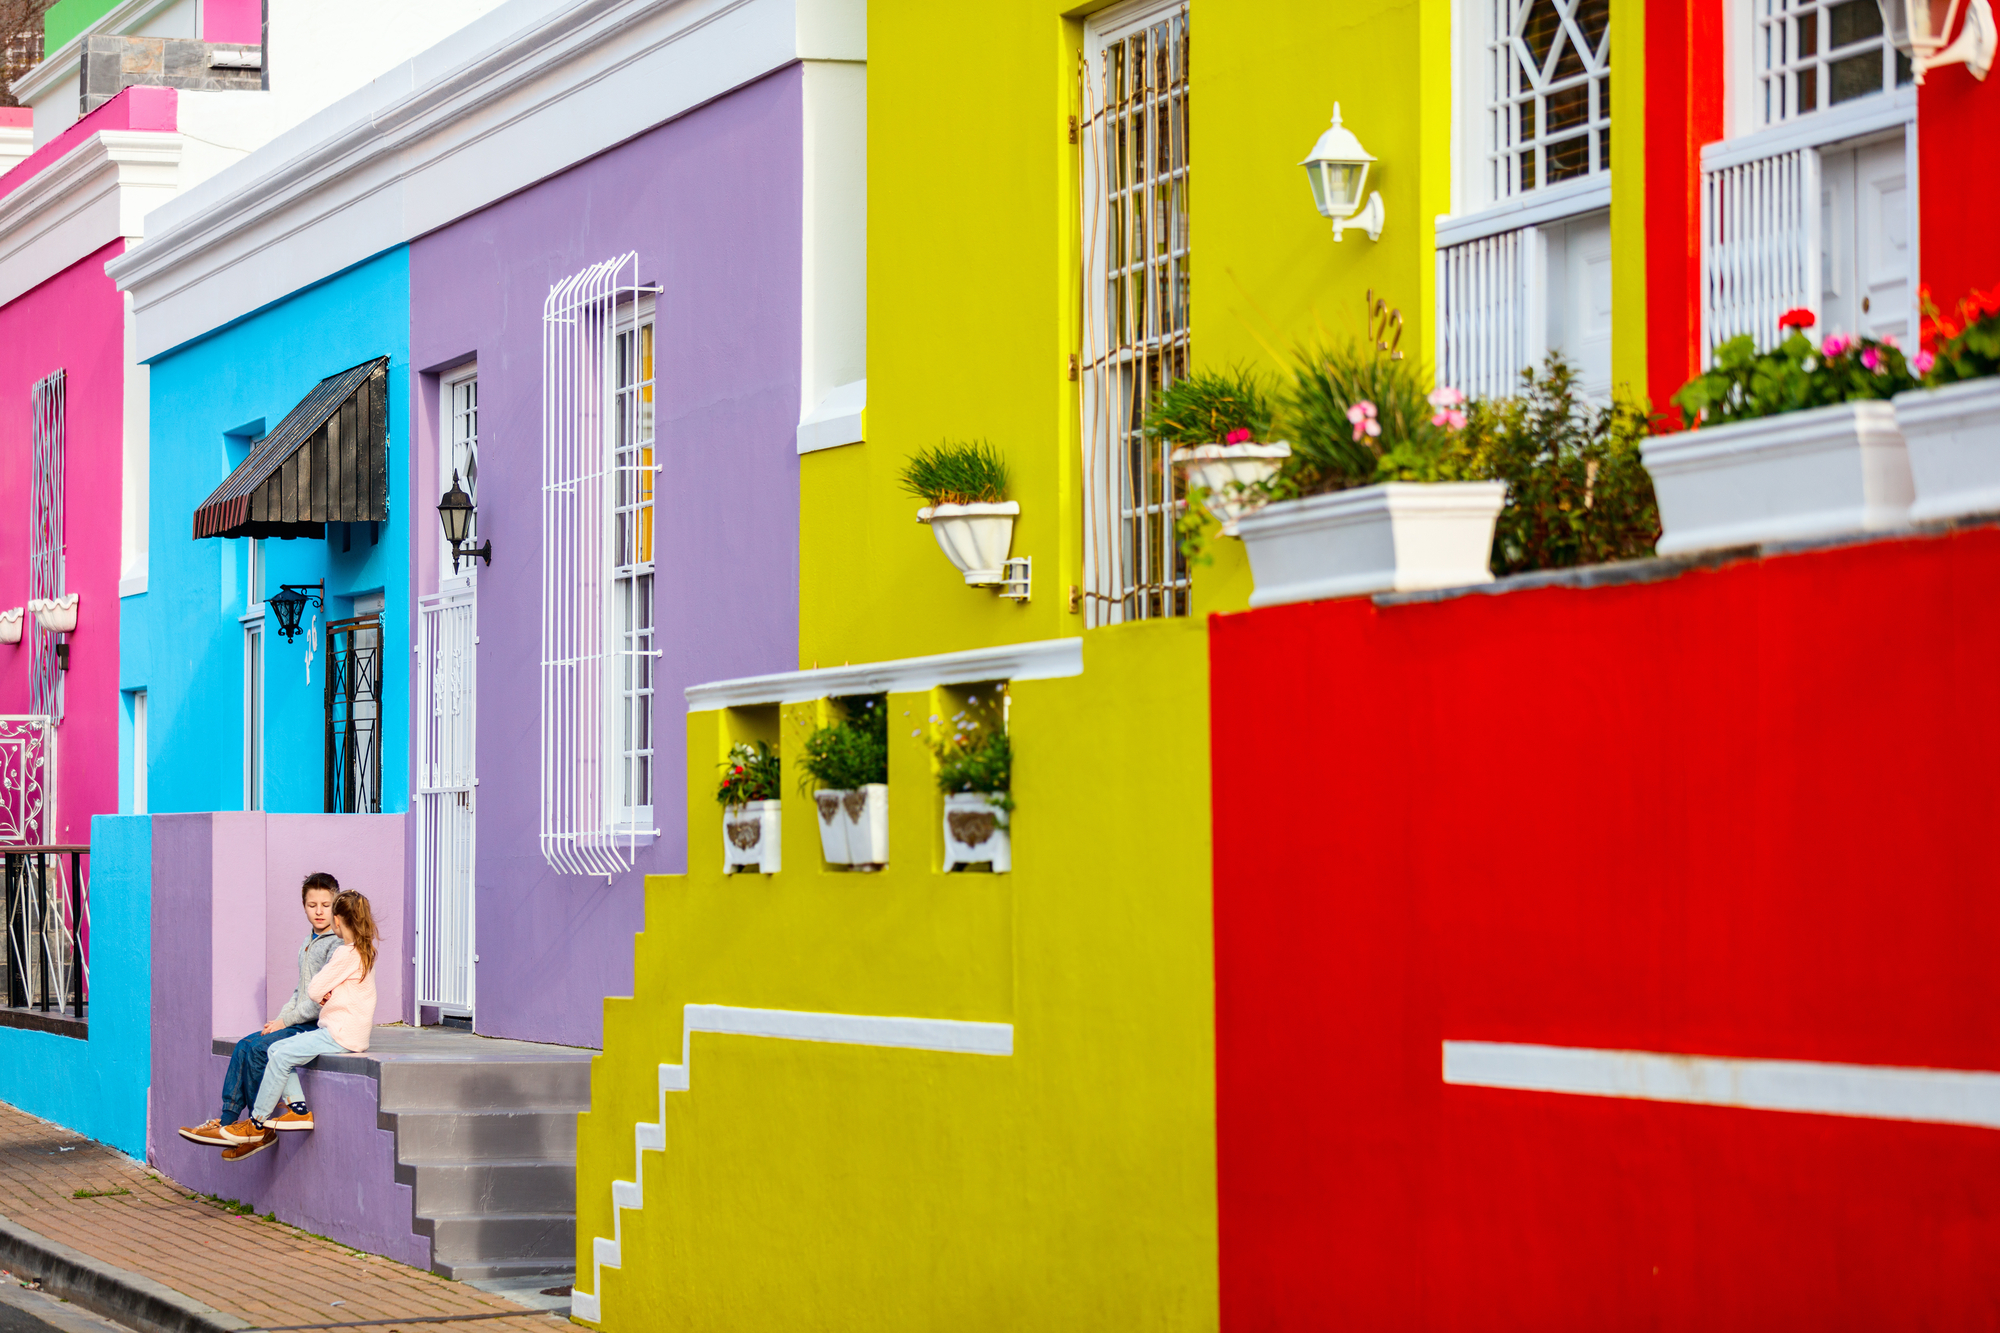 The colorful Bo Kaap neighborhood in Cape Town.